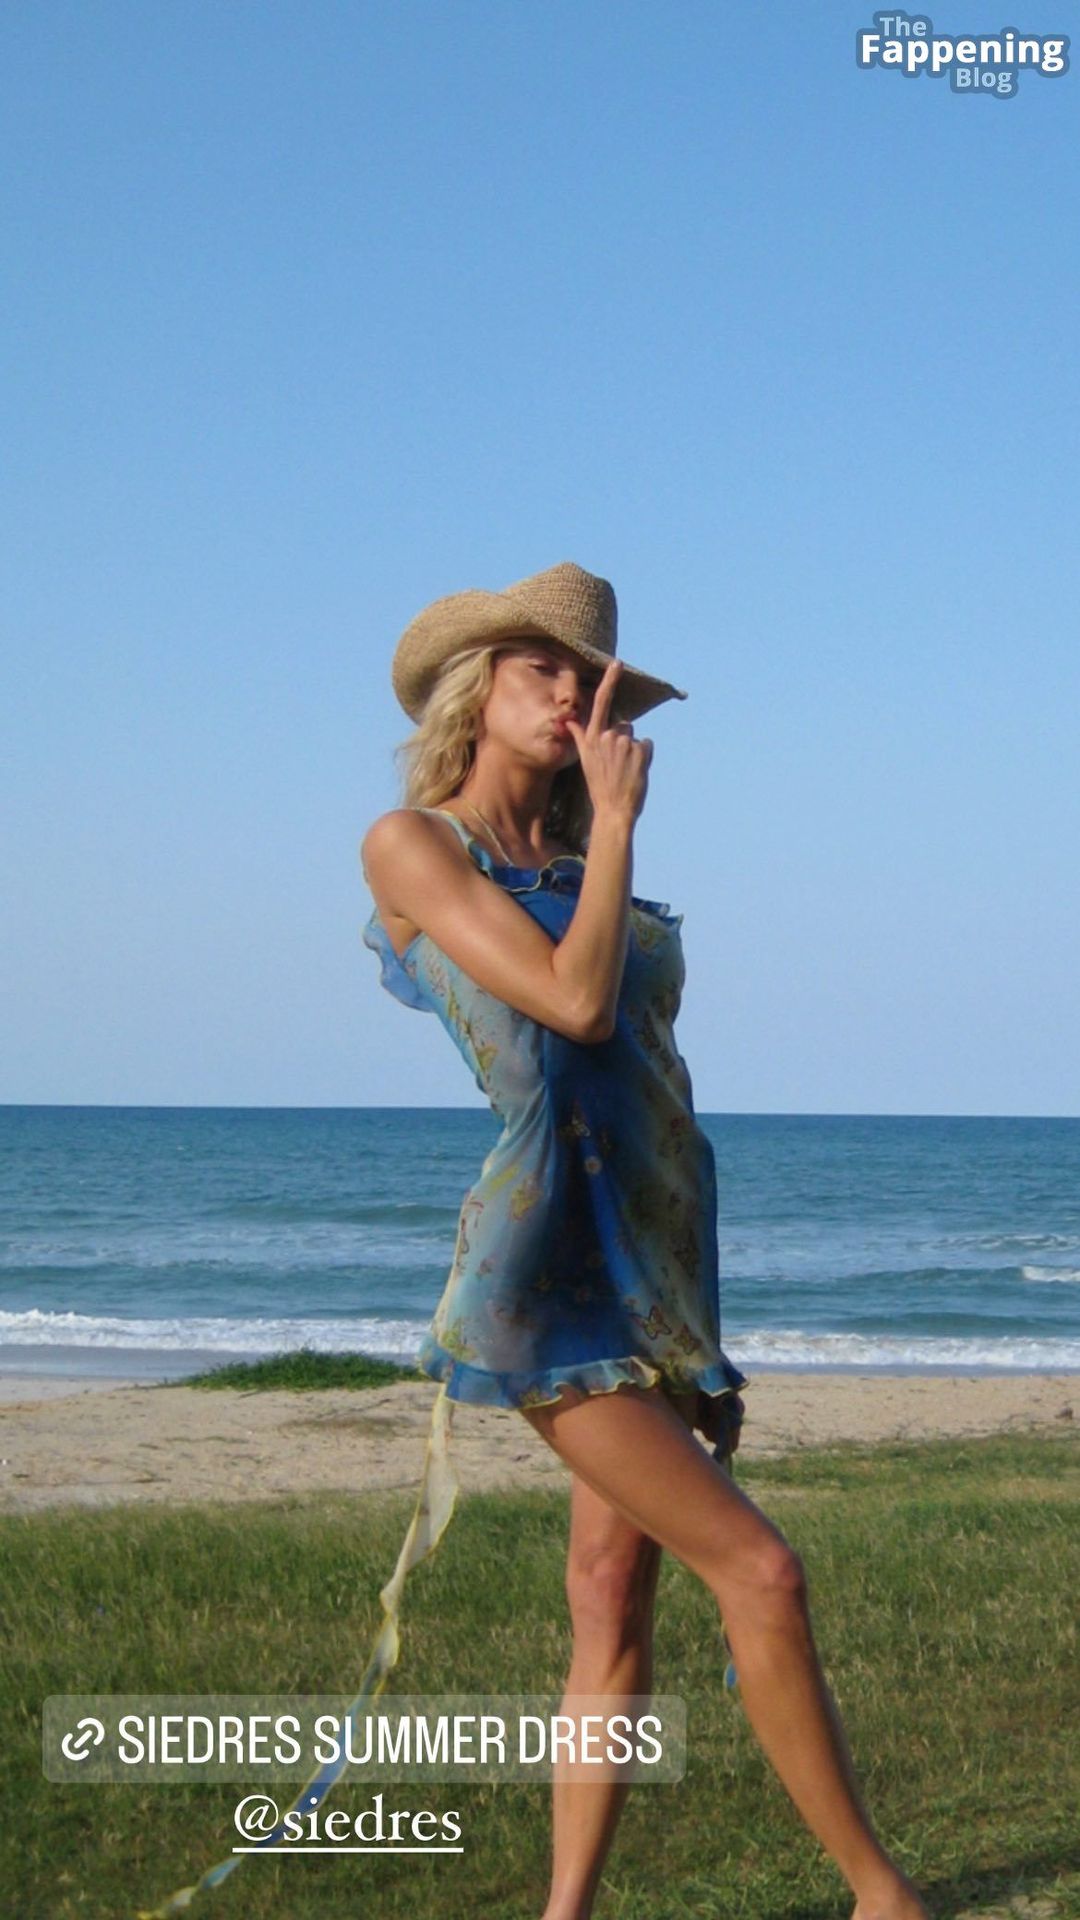 Charlotte McKinney Displays Her Slender Figure in a Bikini (7 Photos)